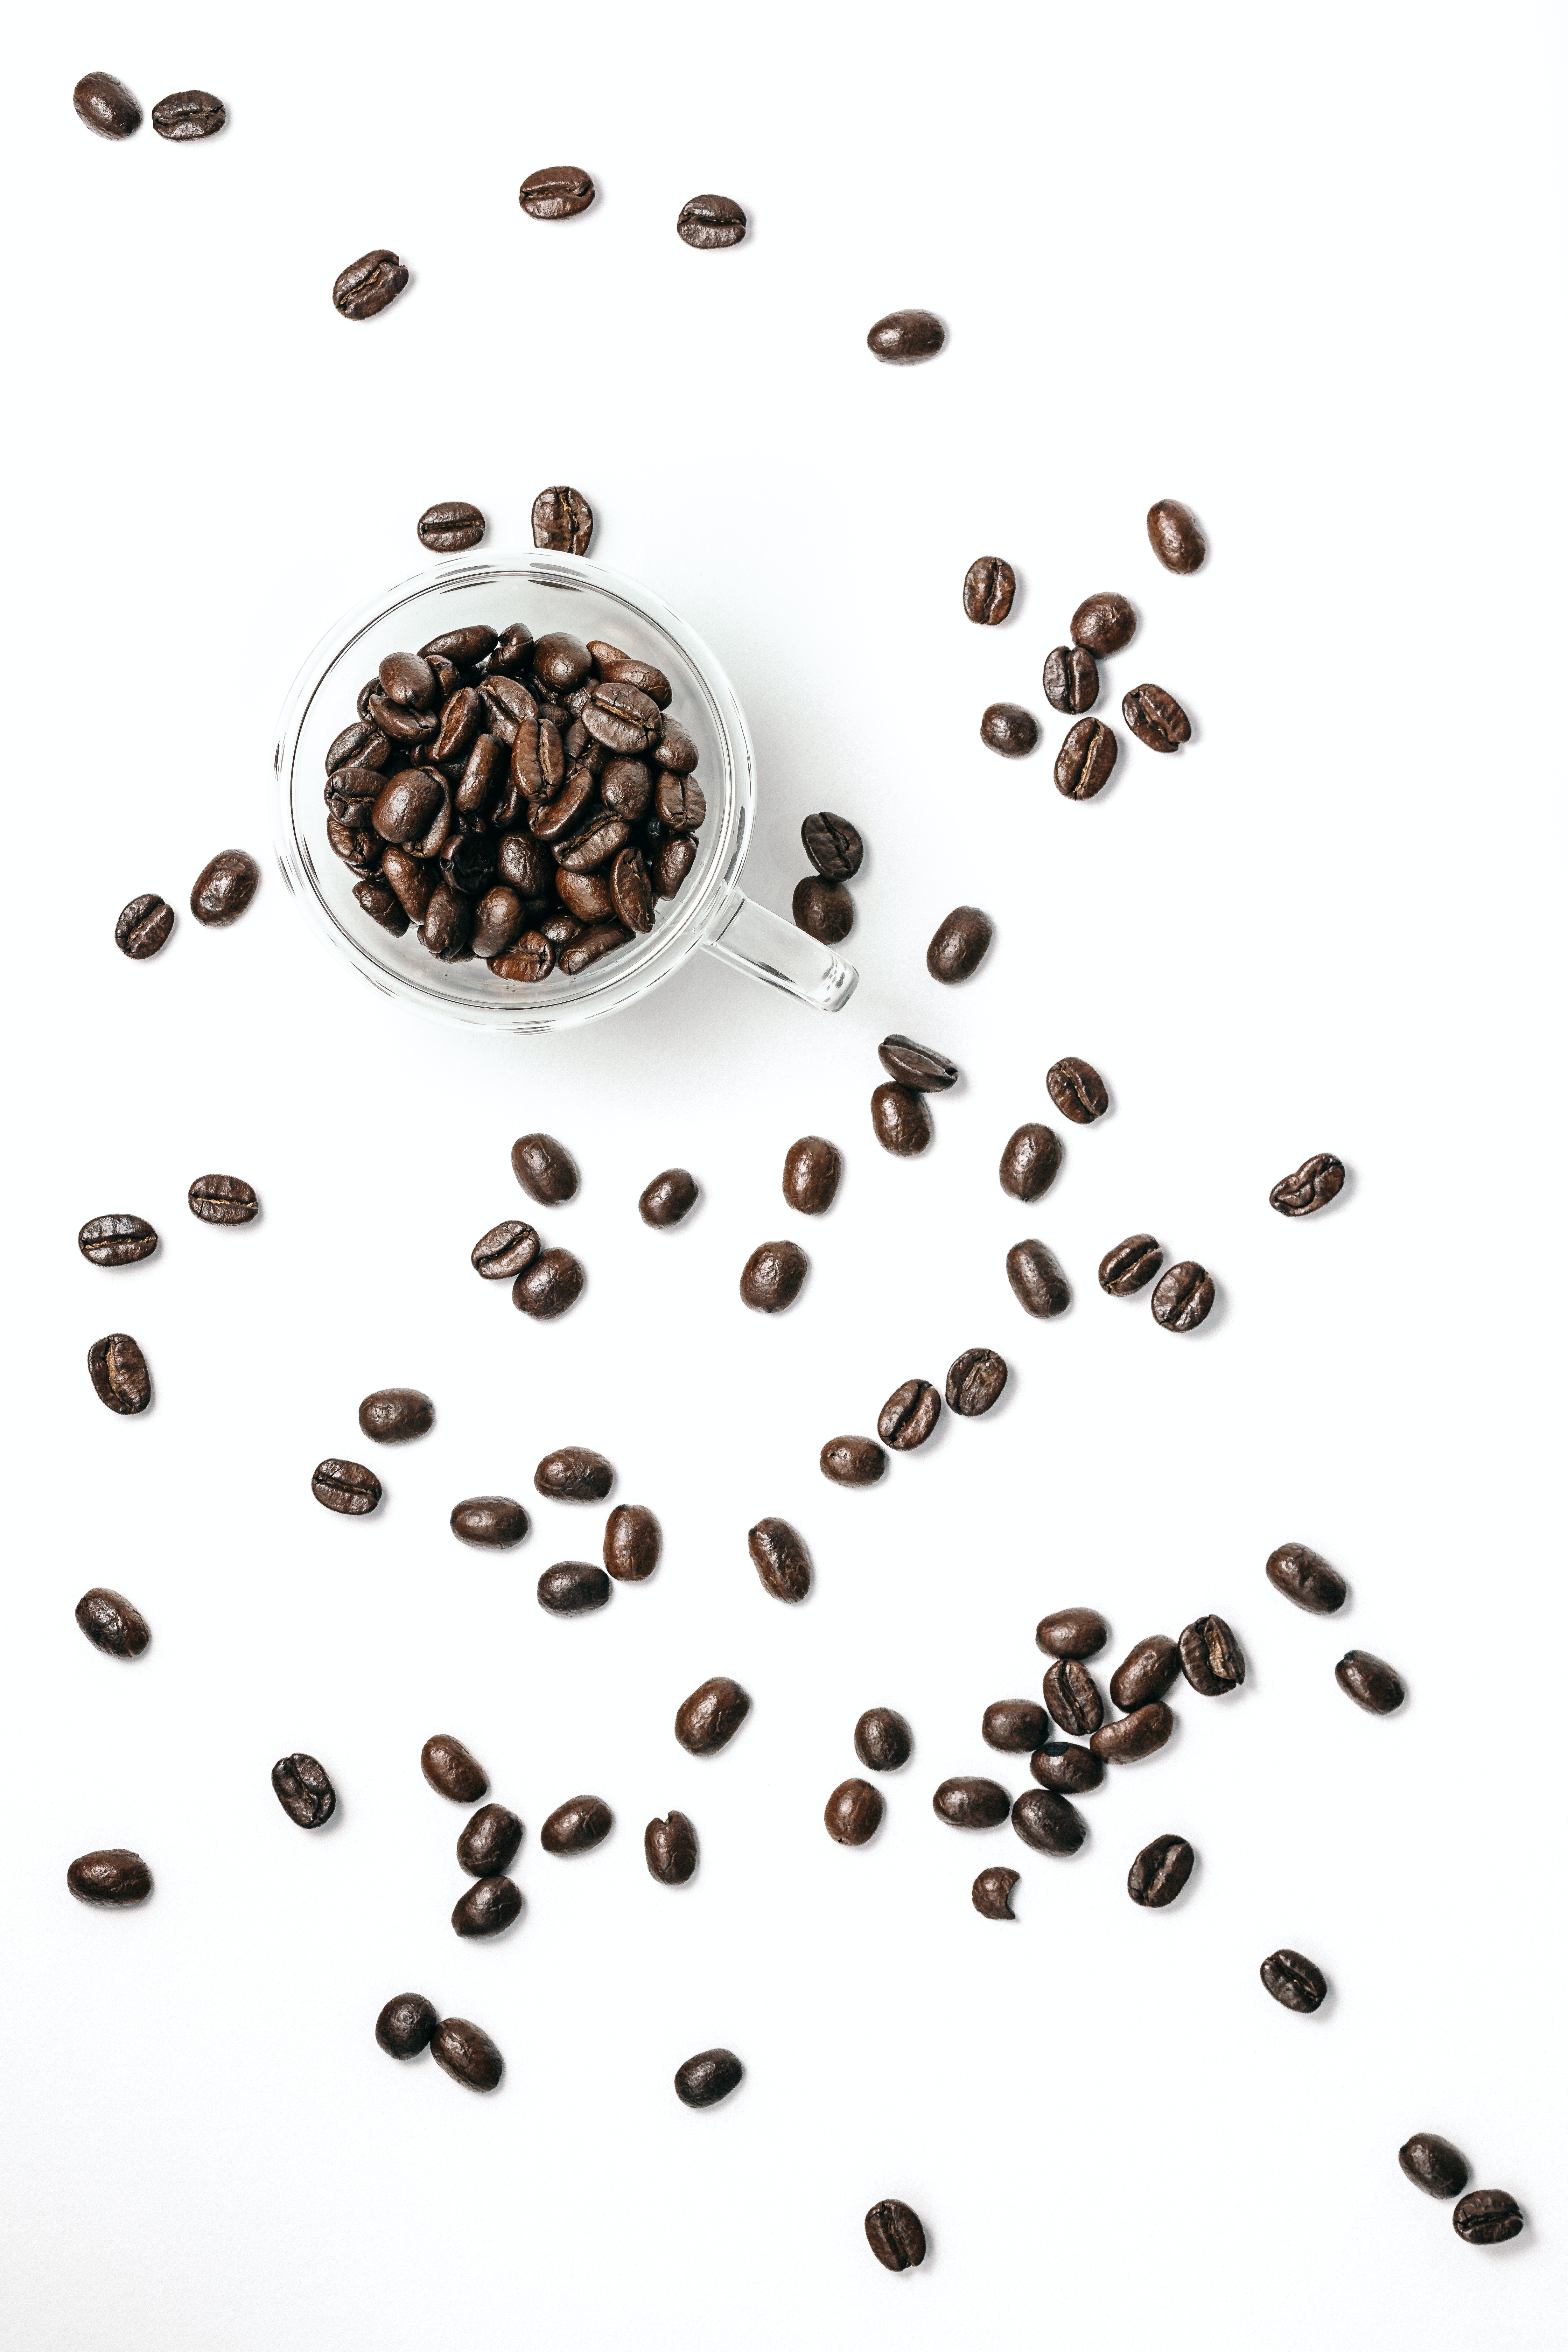 Free HD grains, coffee beans, food, coffee, glass, grain